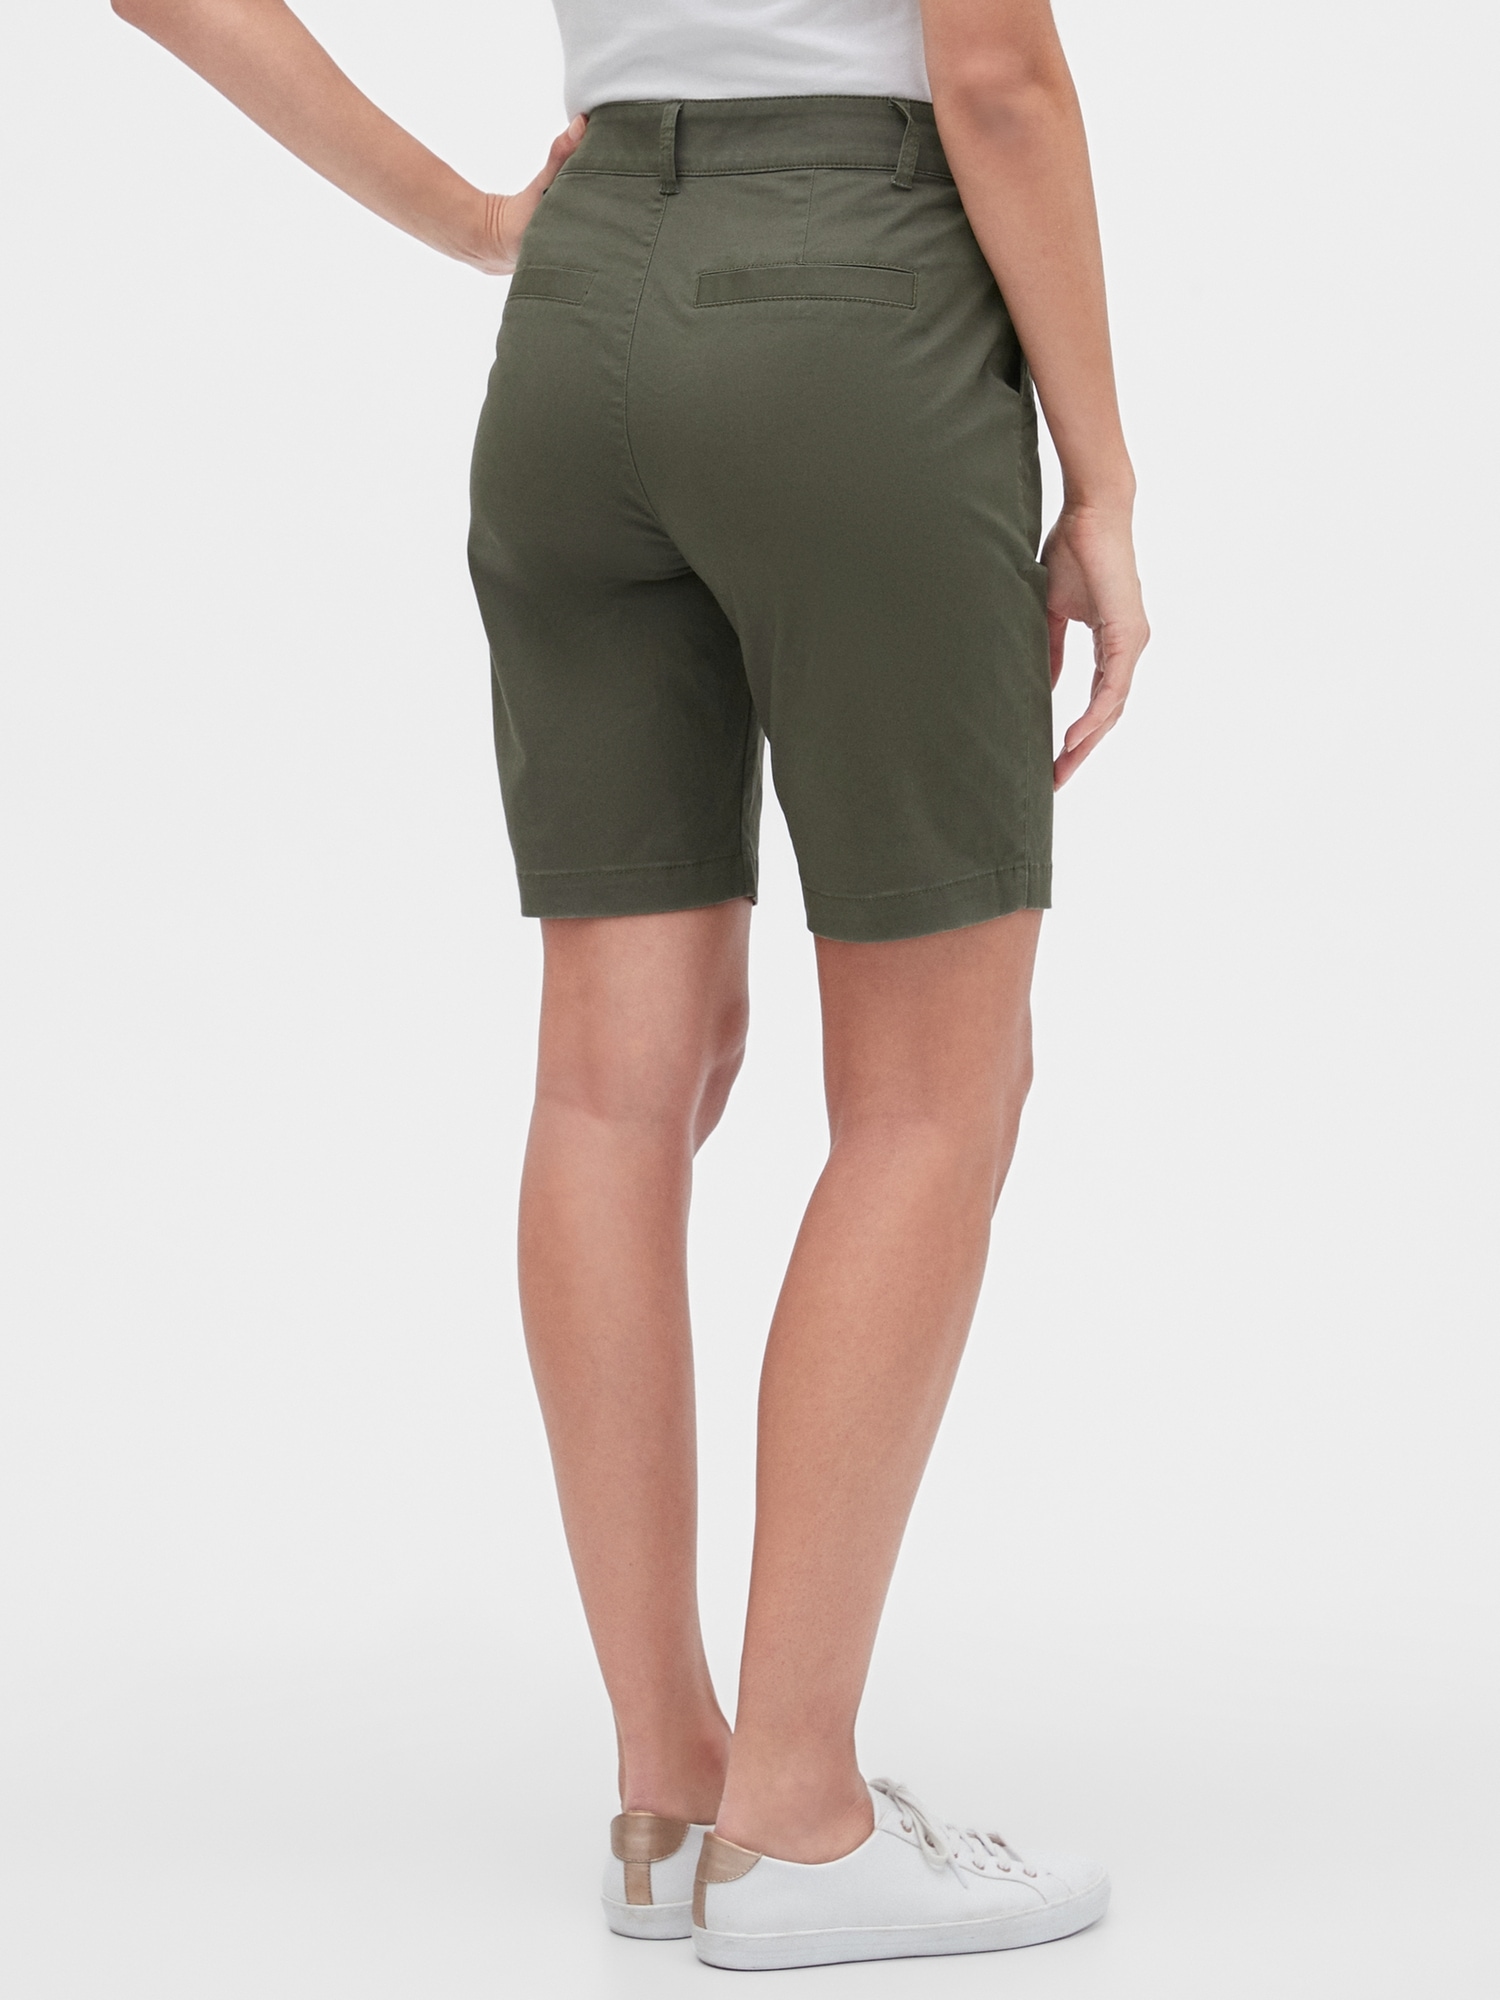 gap factory womens shorts